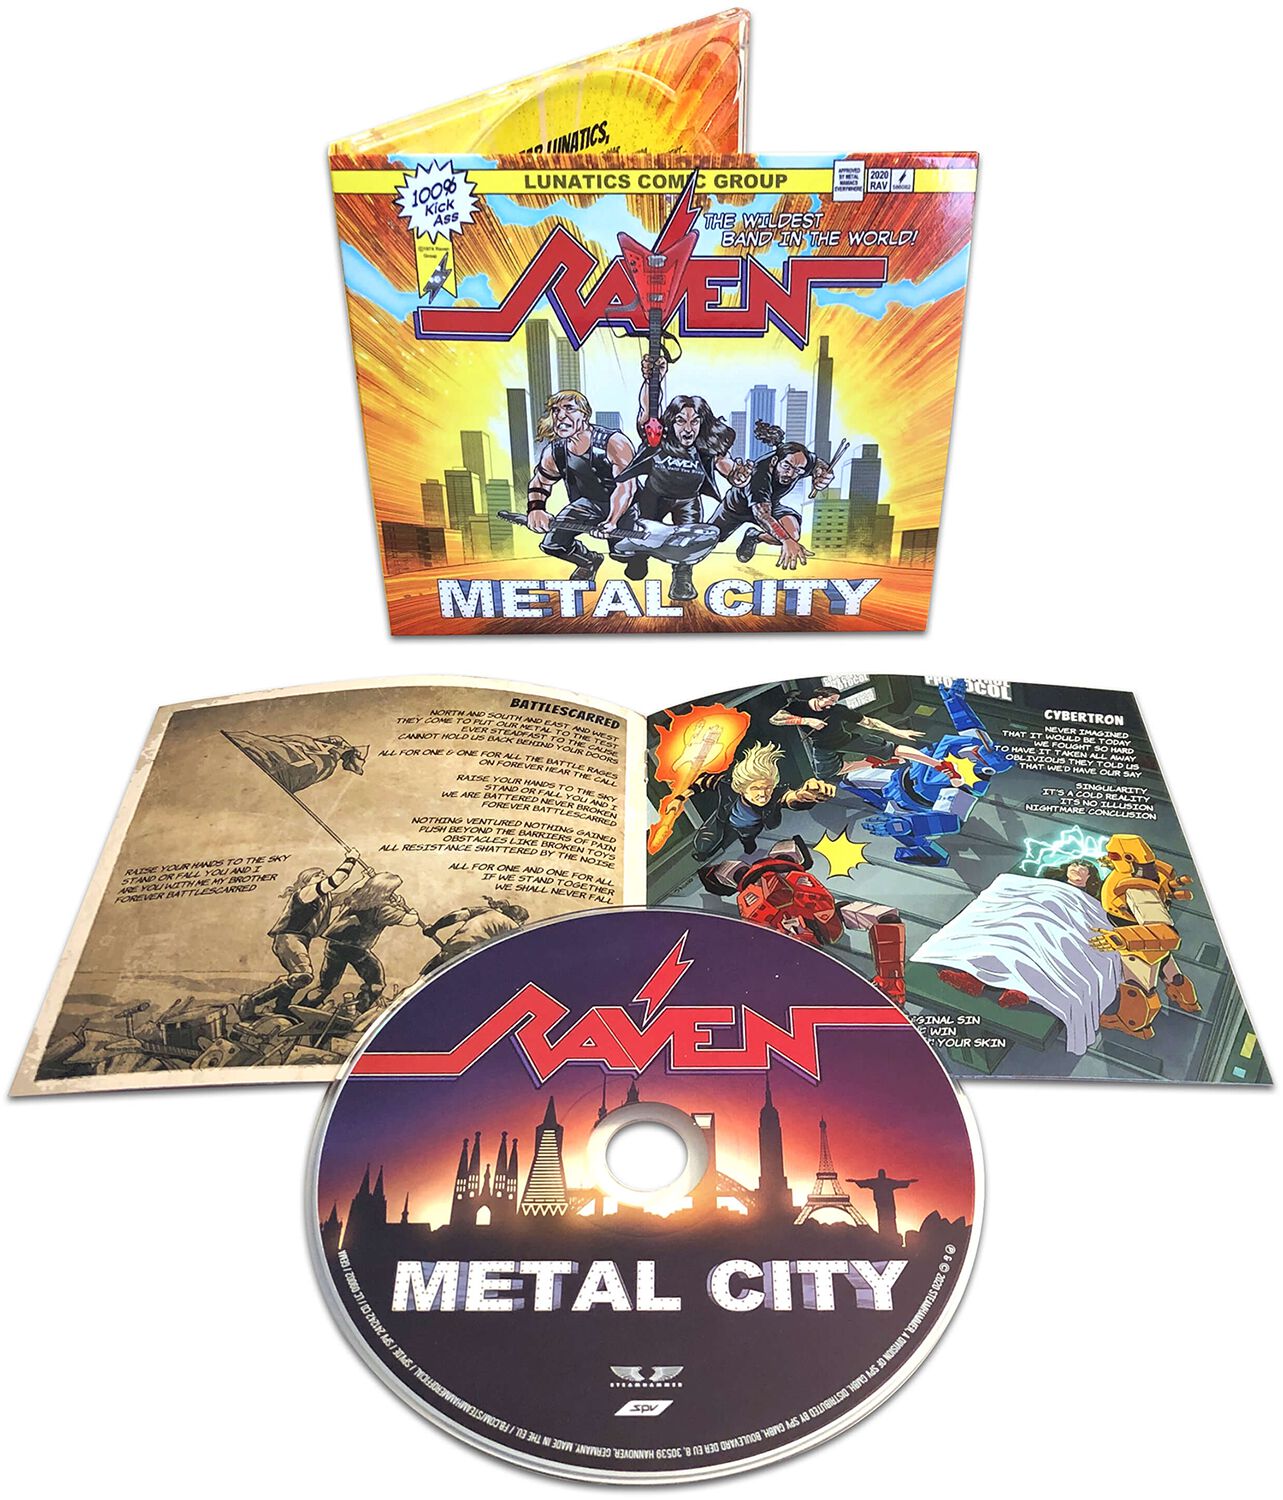 Image of Raven Metal city CD Standard